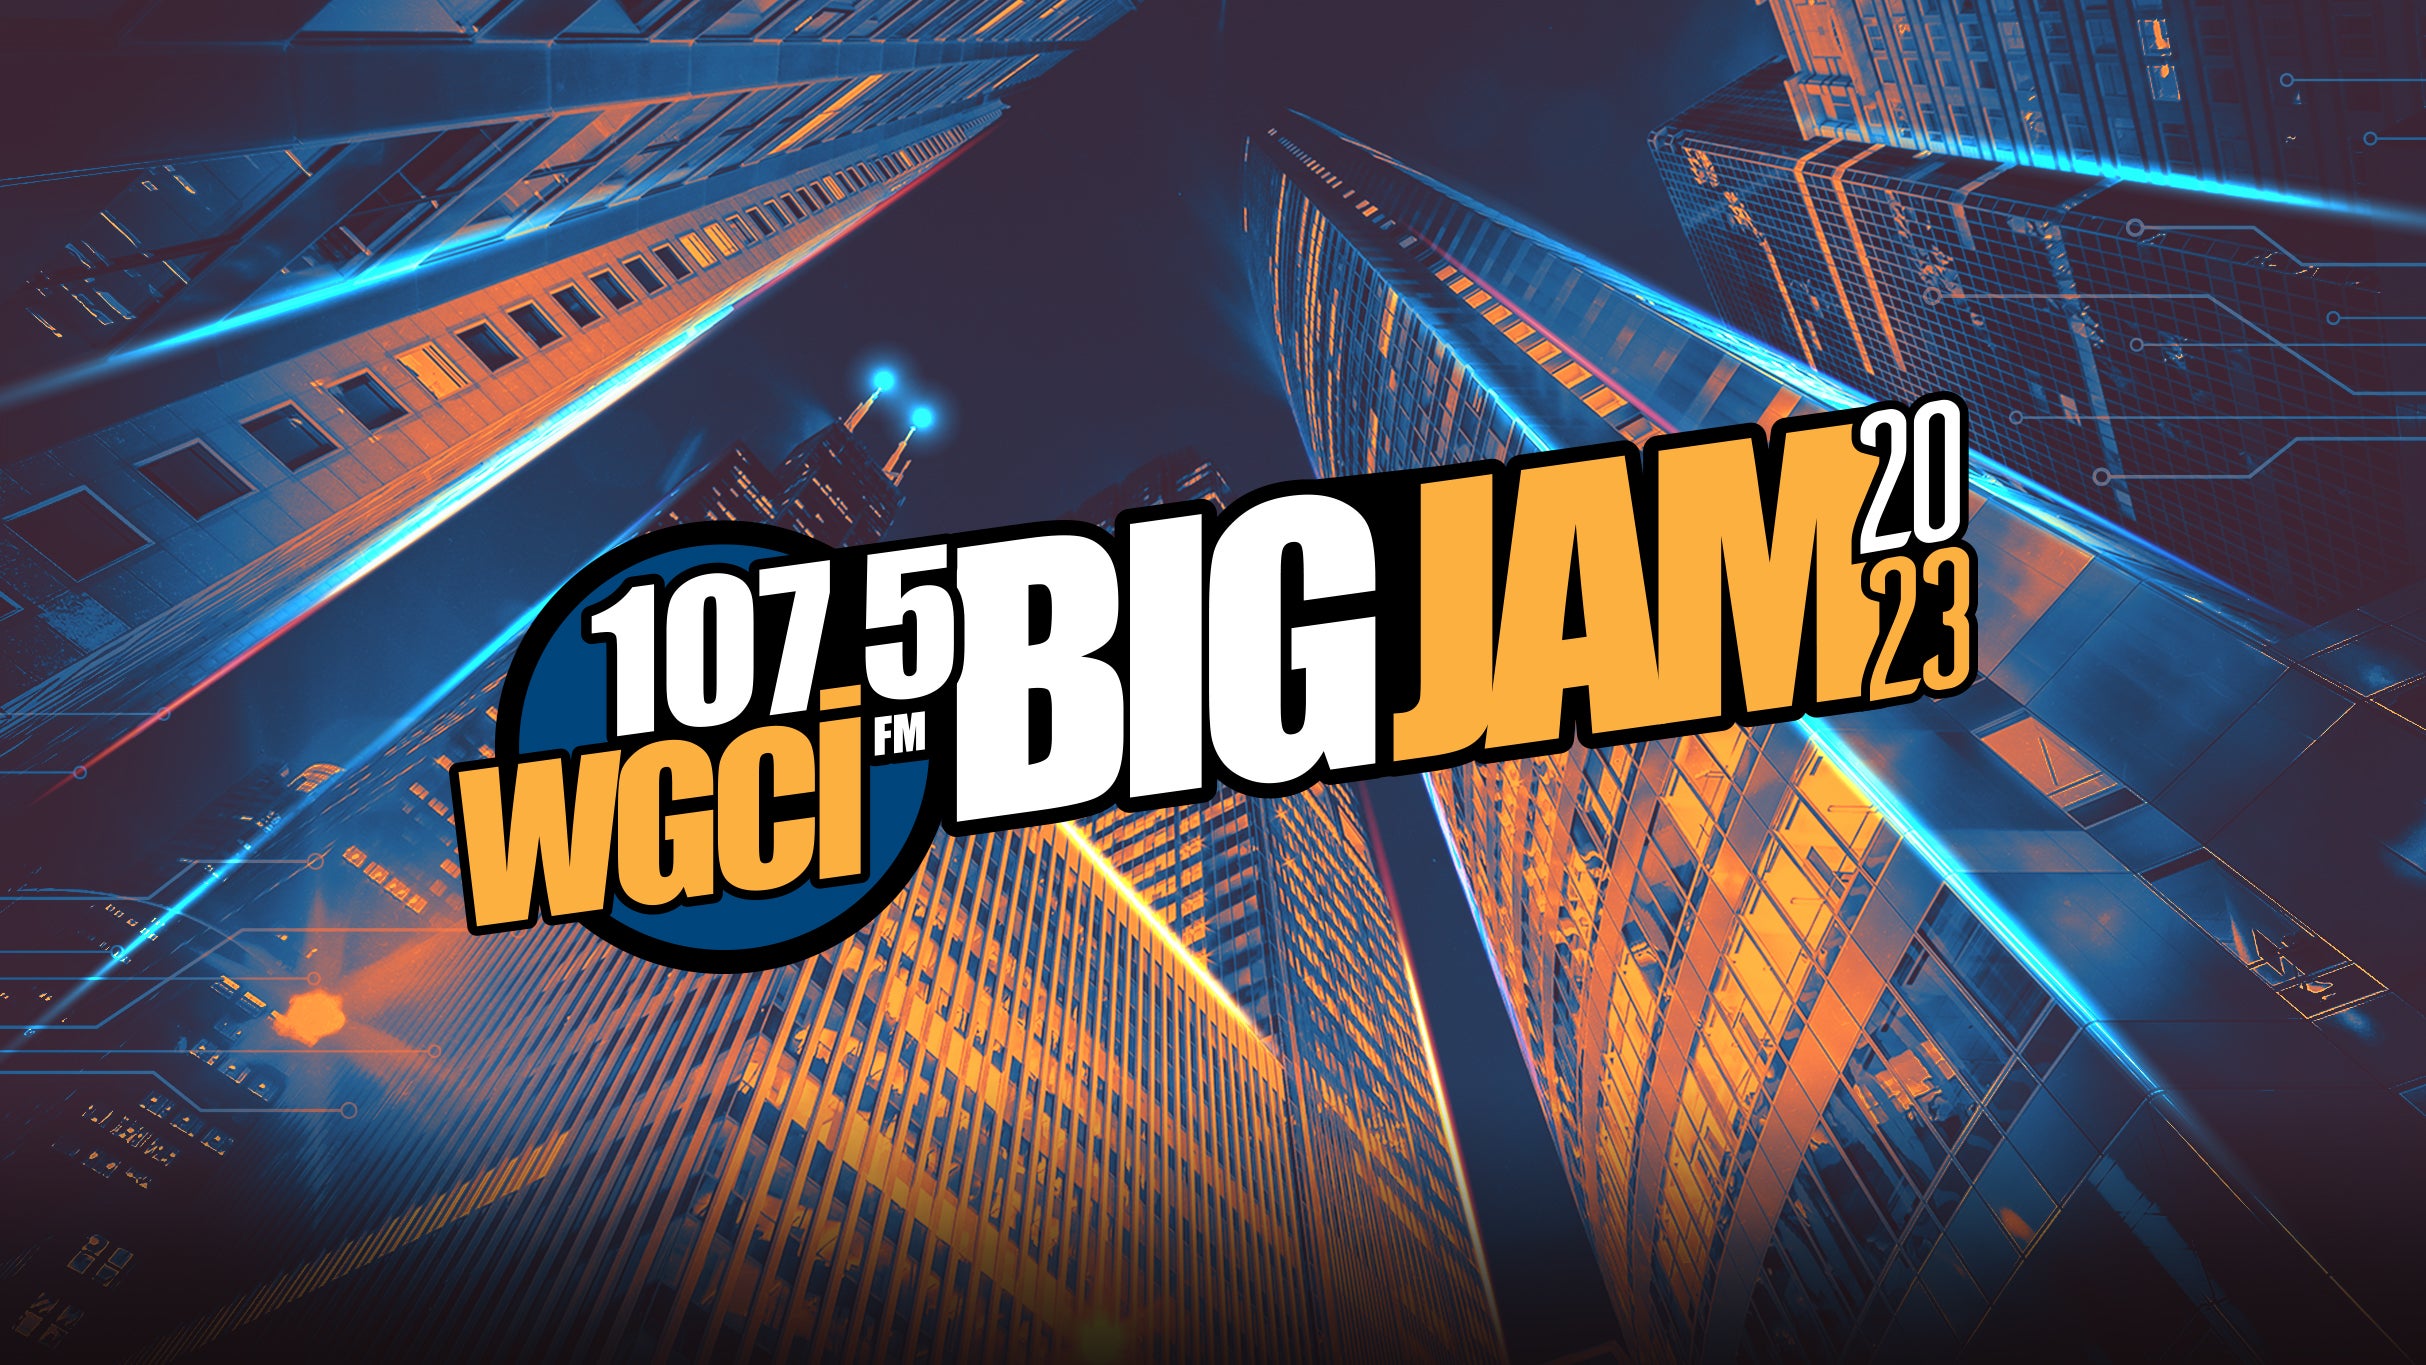 WGCI Big Jam in Chicago promo photo for Venue presale offer code